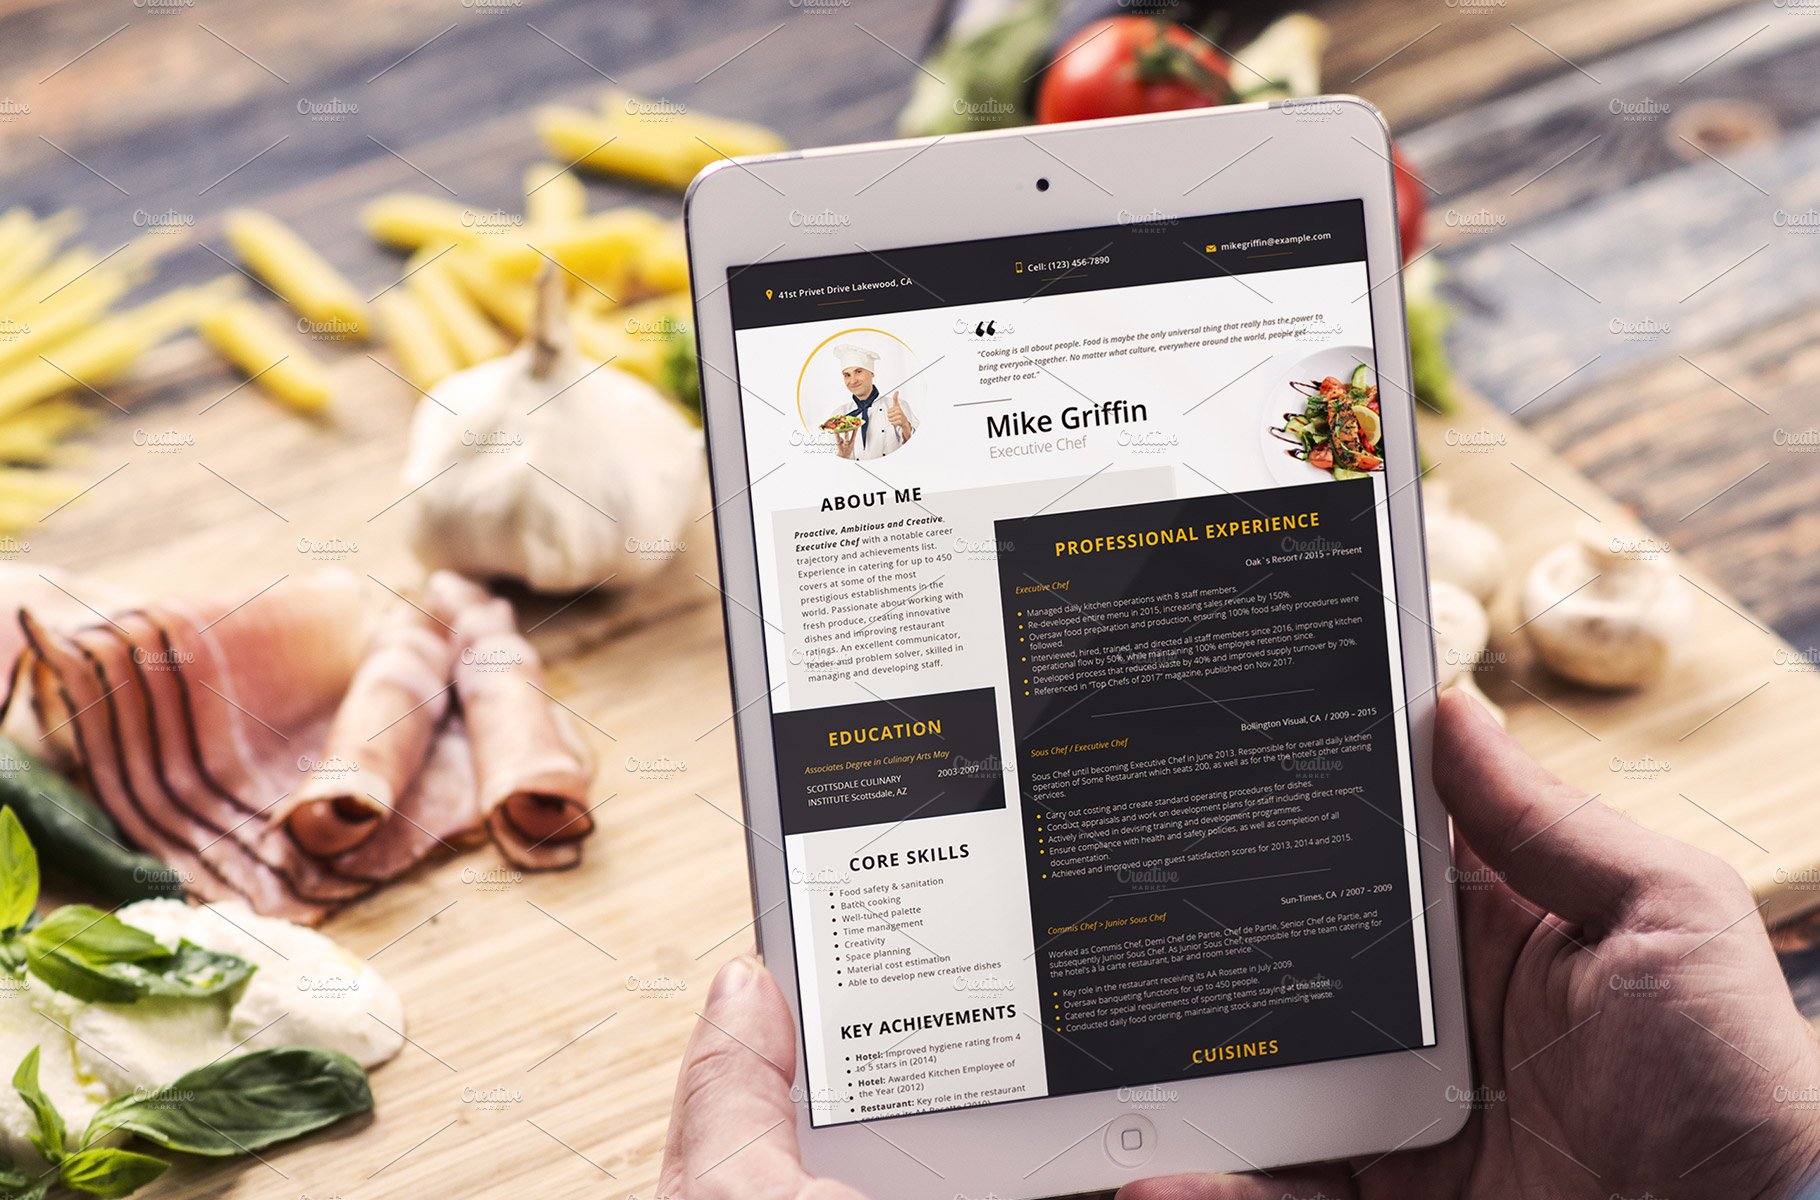 Editable Resume: Executive Chef preview image.